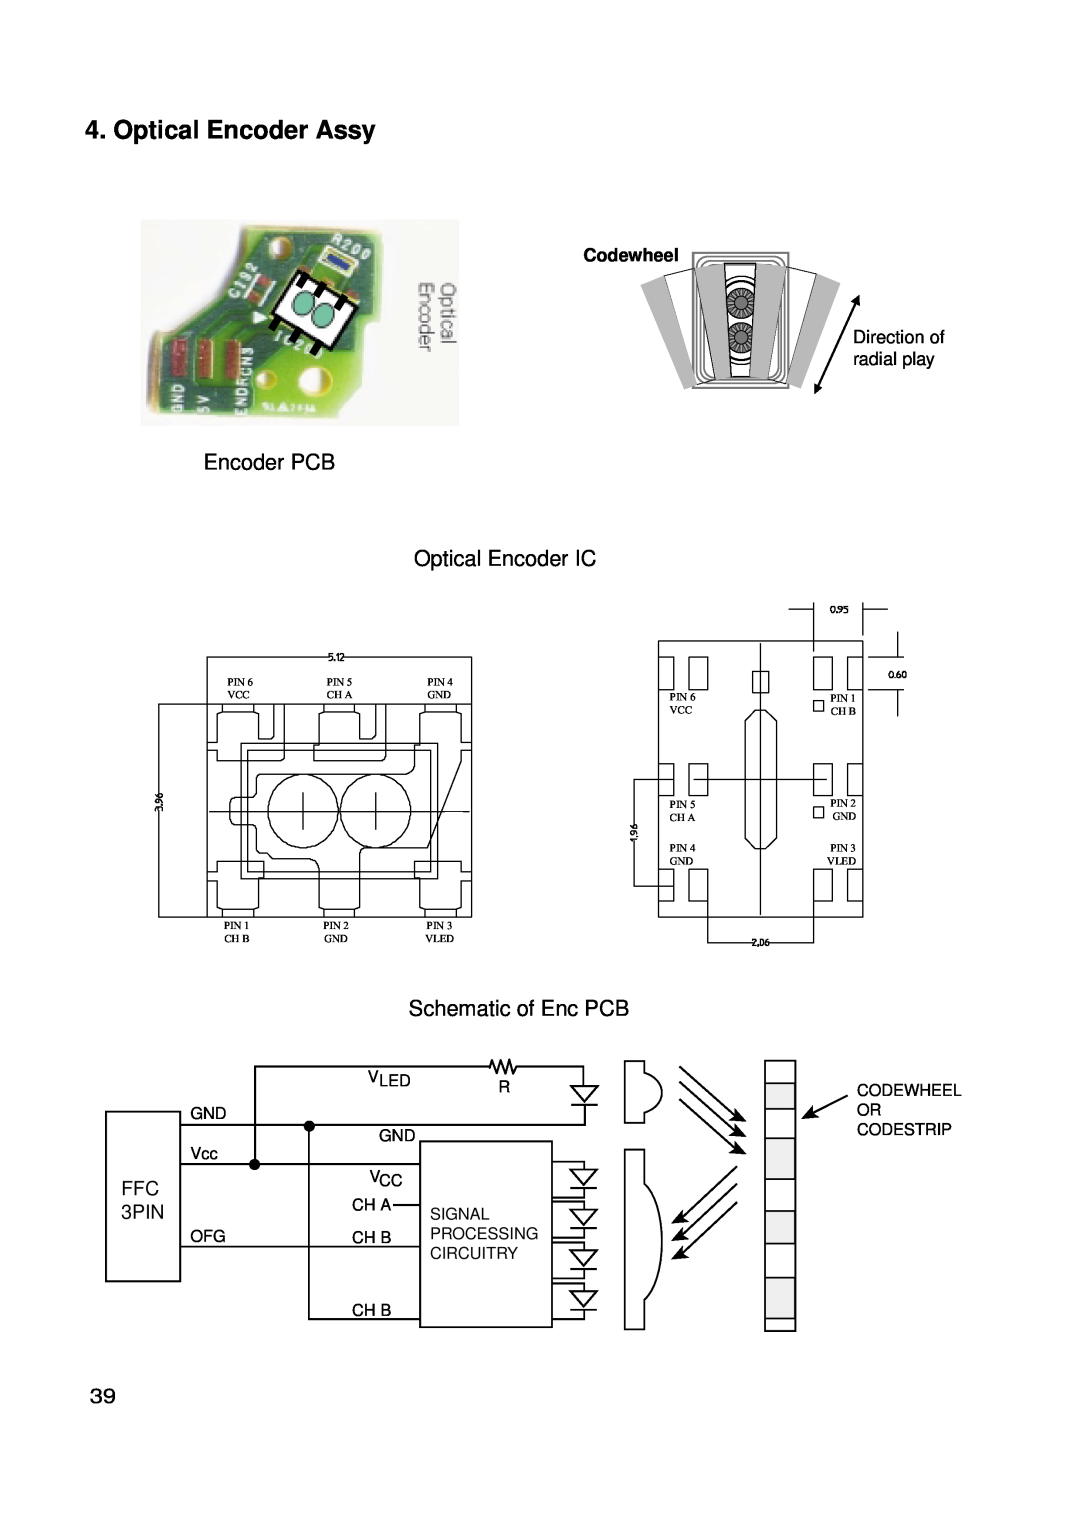 LG Electronics GSA-4167B Optical Encoder Assy, Encoder PCB Optical Encoder IC, Schematic of Enc PCB, FFC 3PIN, Codewheel 